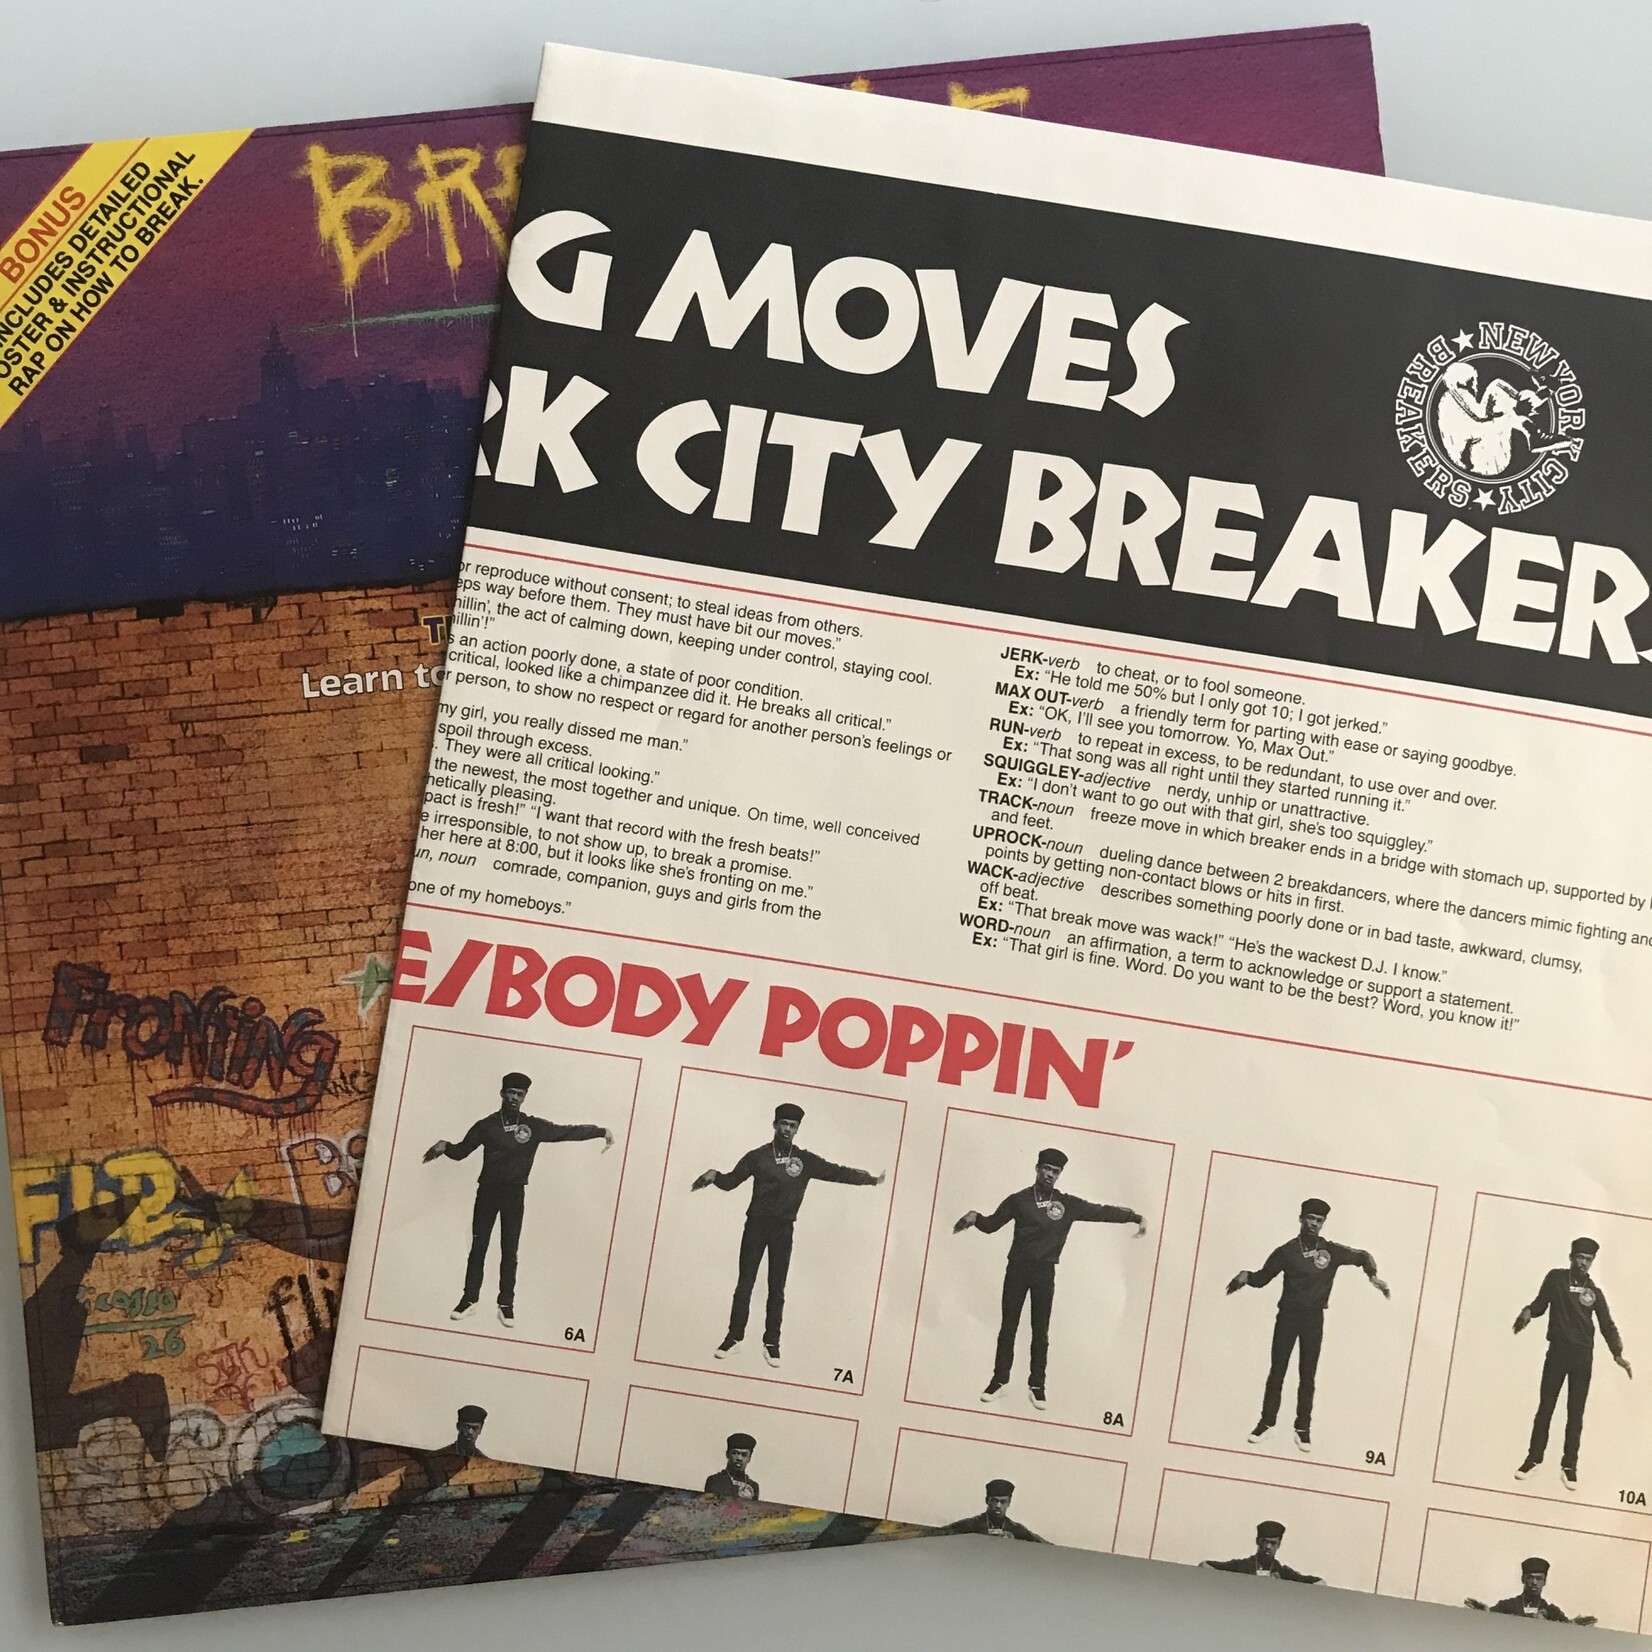 Breakdance: The Best Music For Breaking